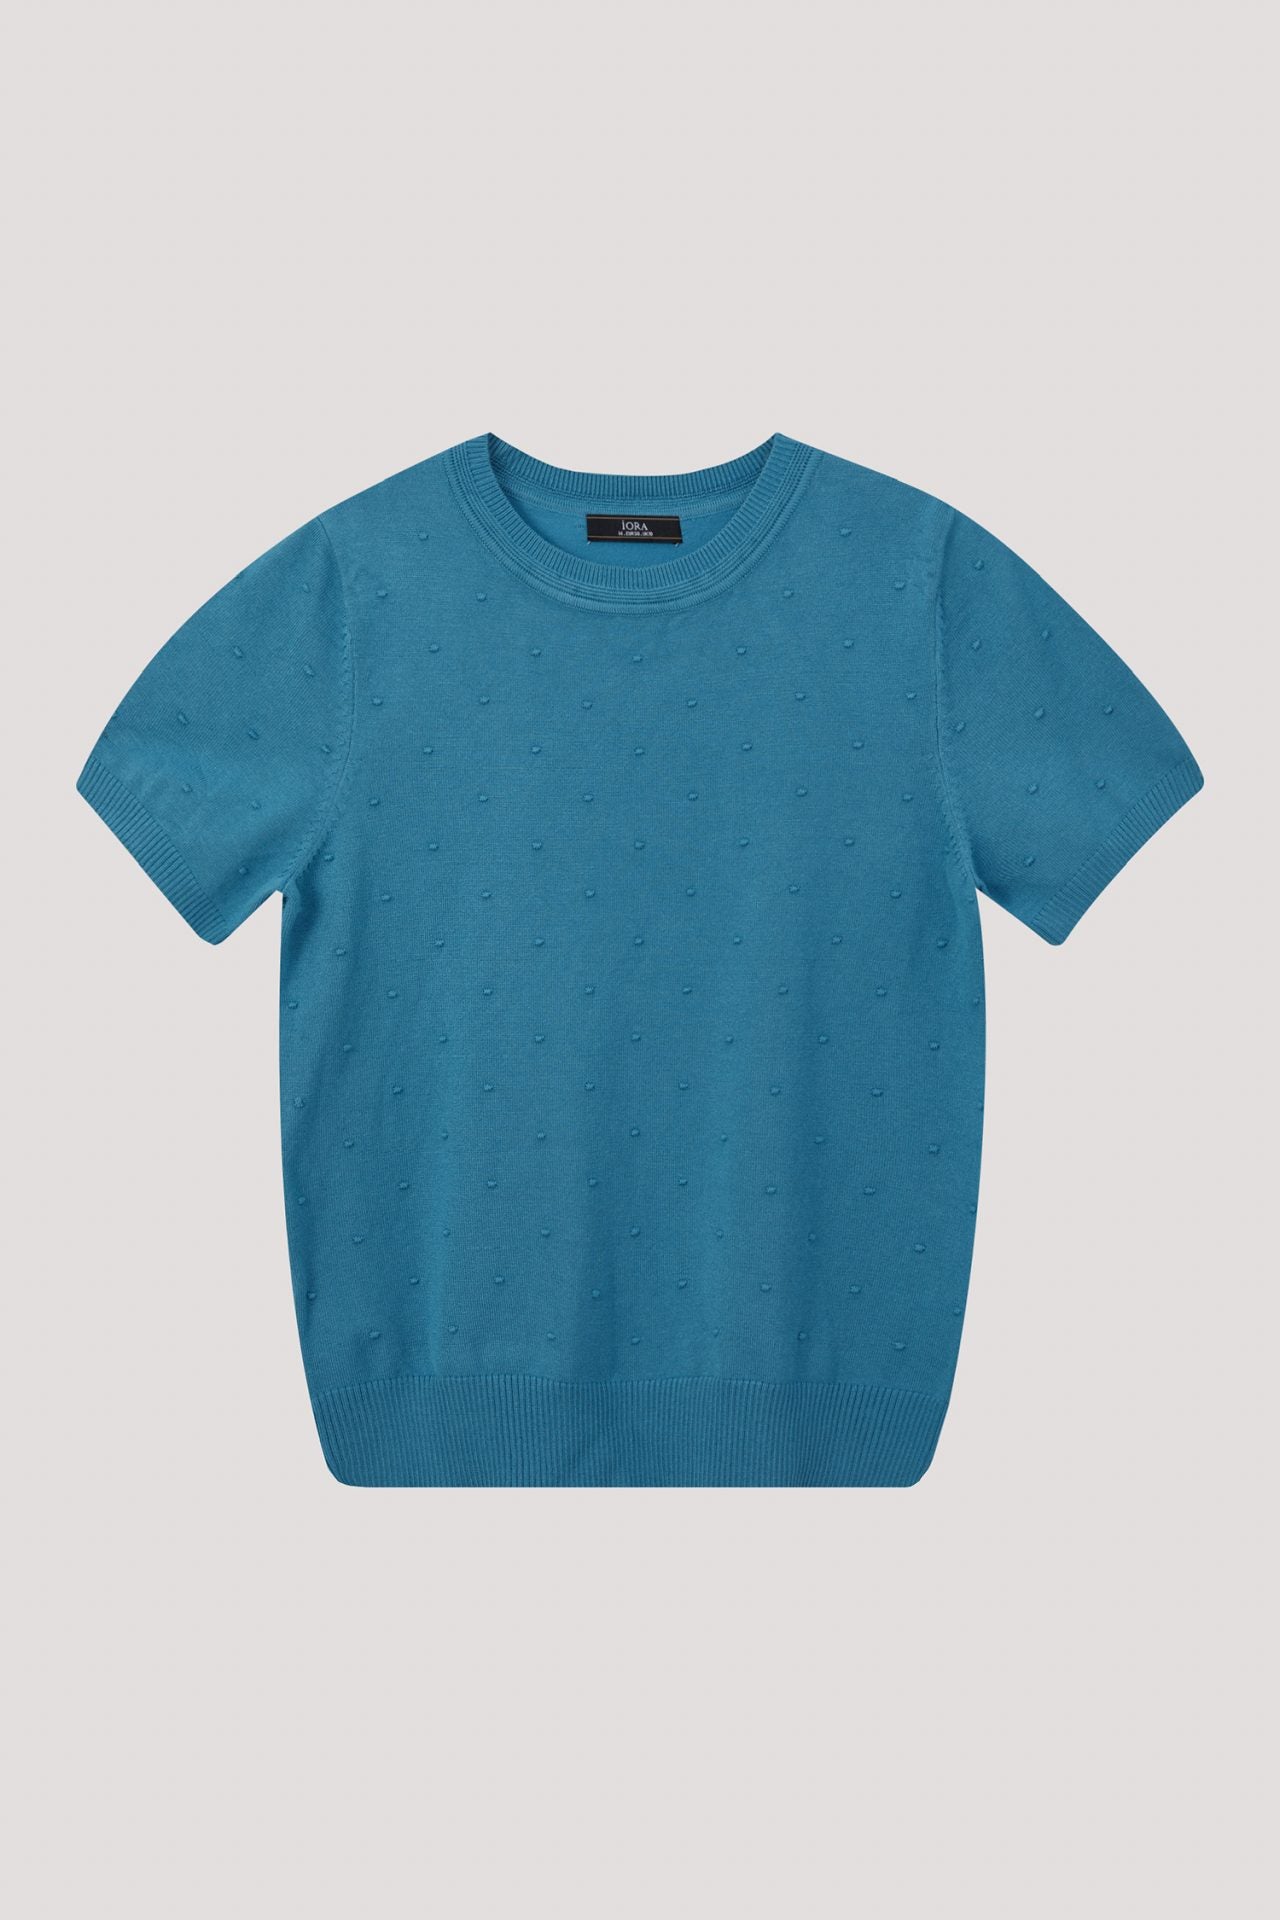 ak 9091 knit top turquoise